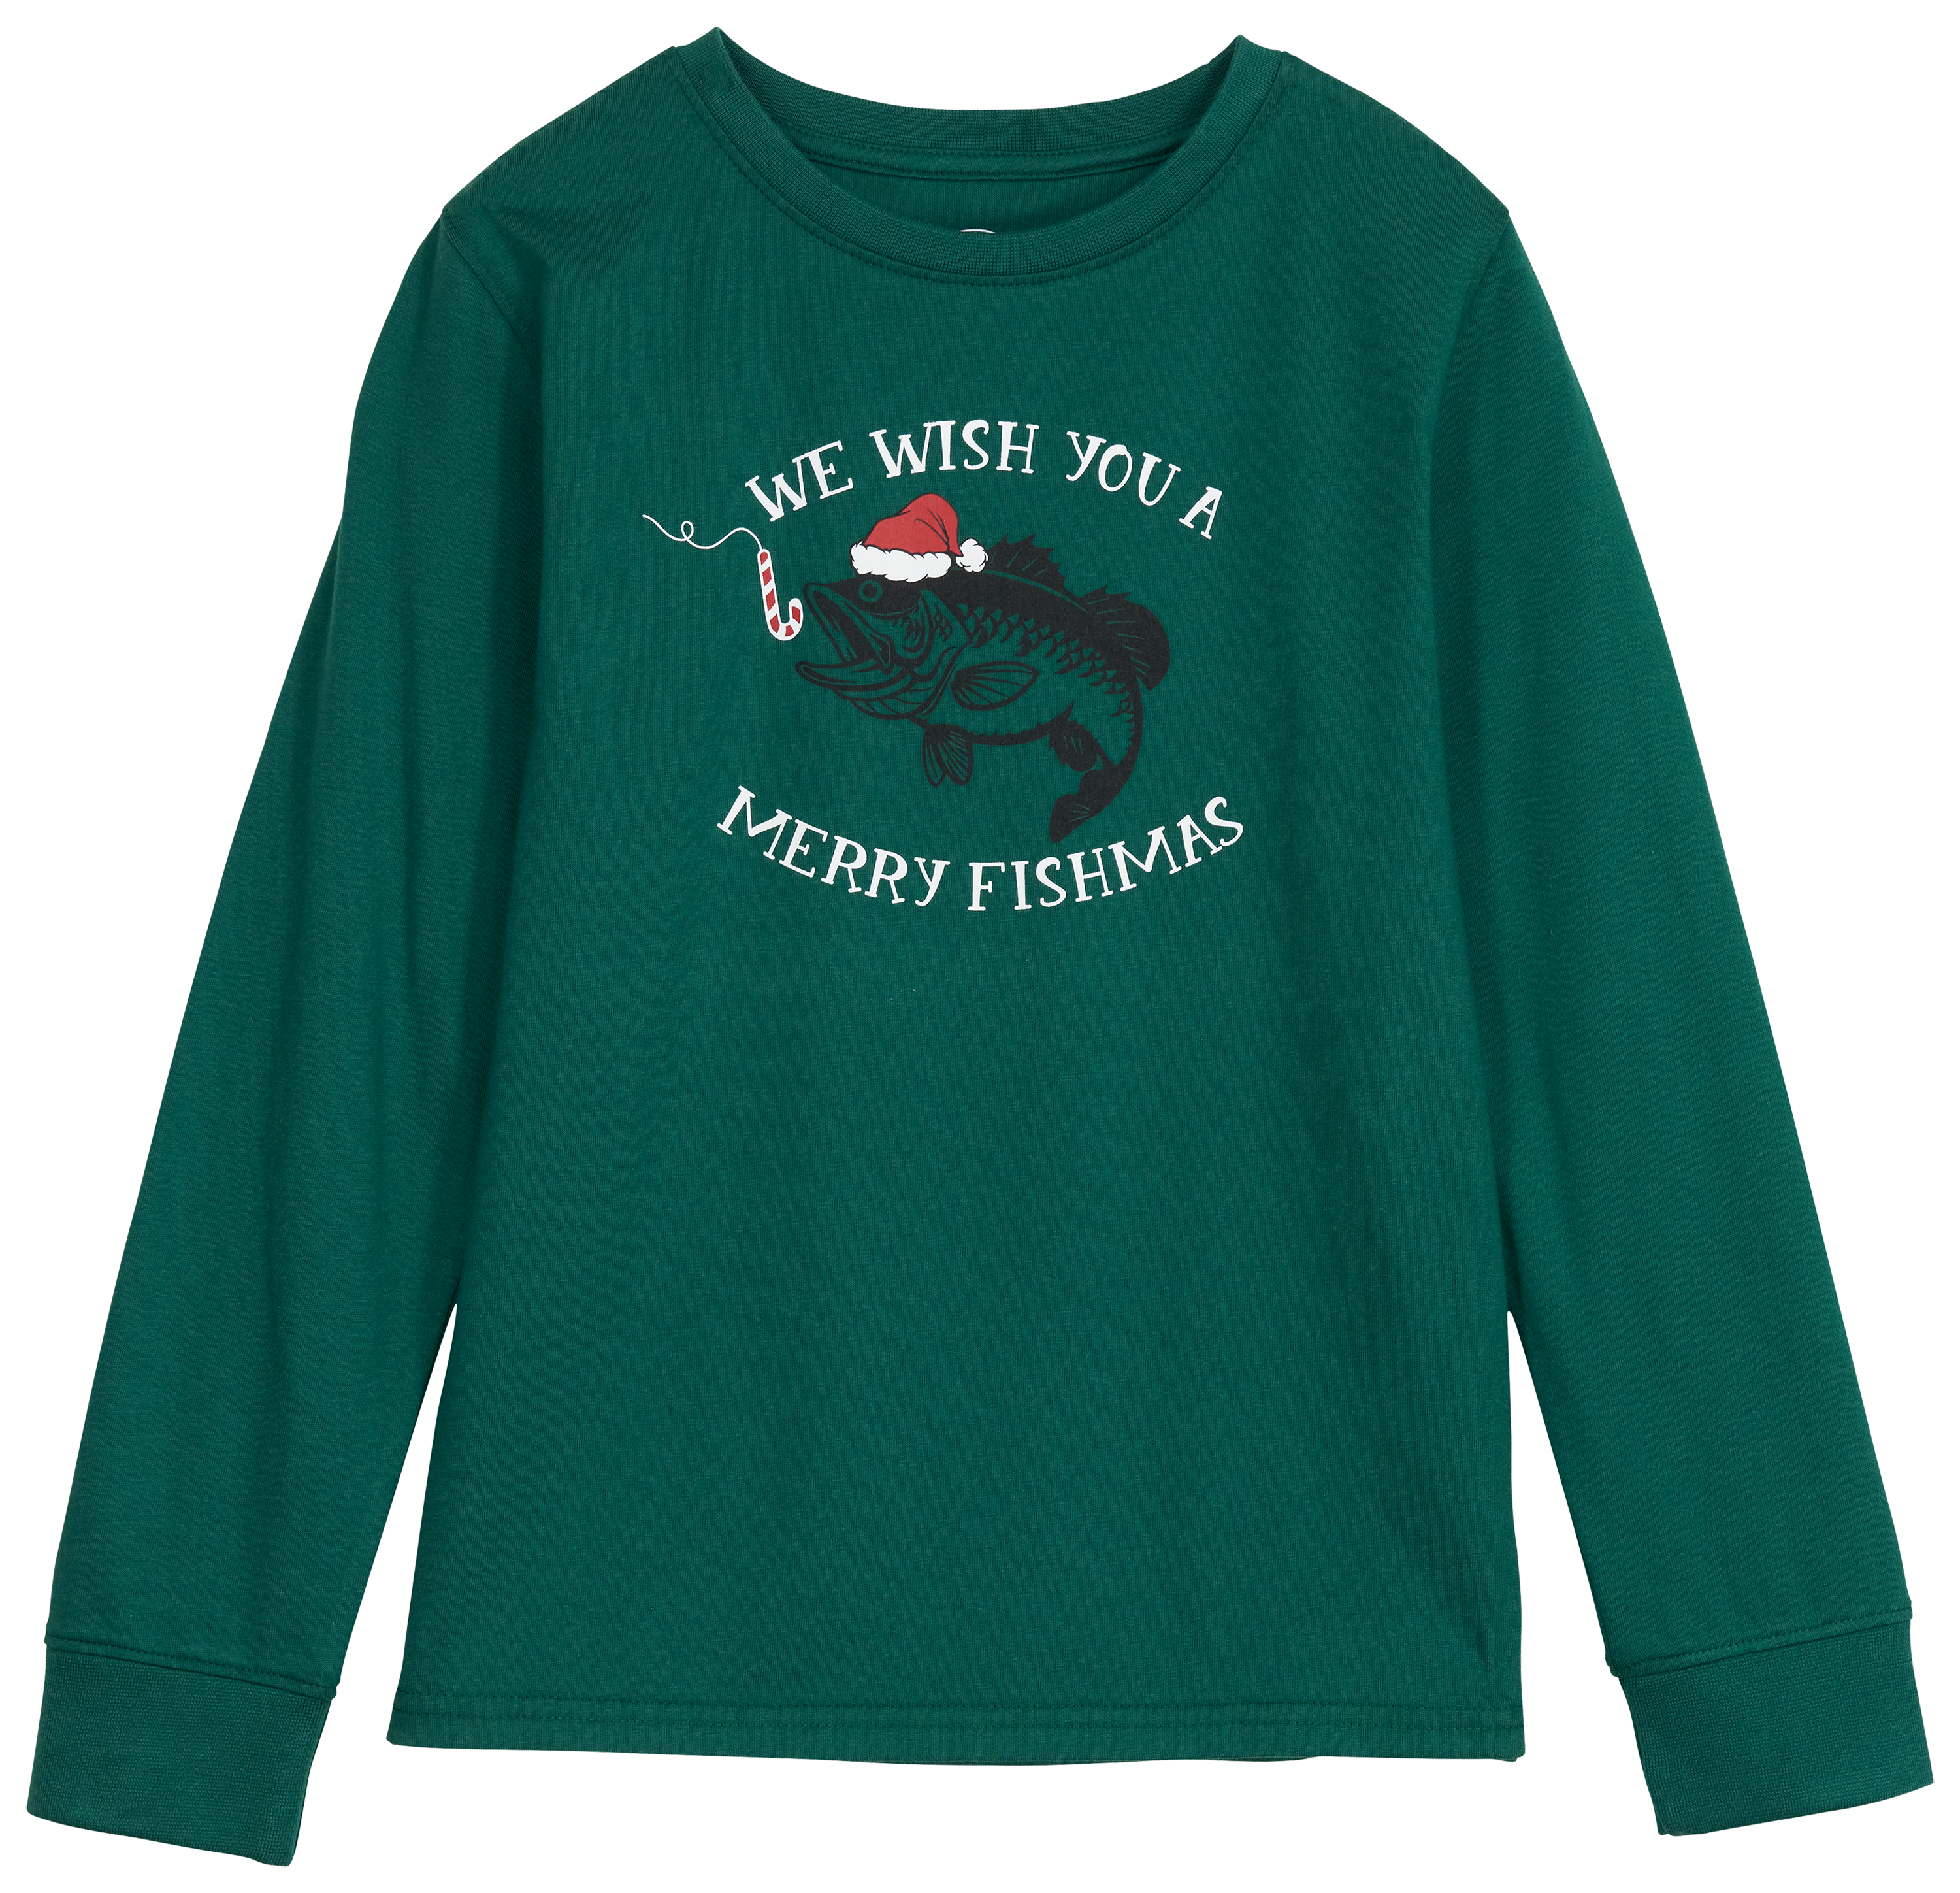 Bass Pro Shops Merry Fishmas Christmas Sweatshirt for Adults